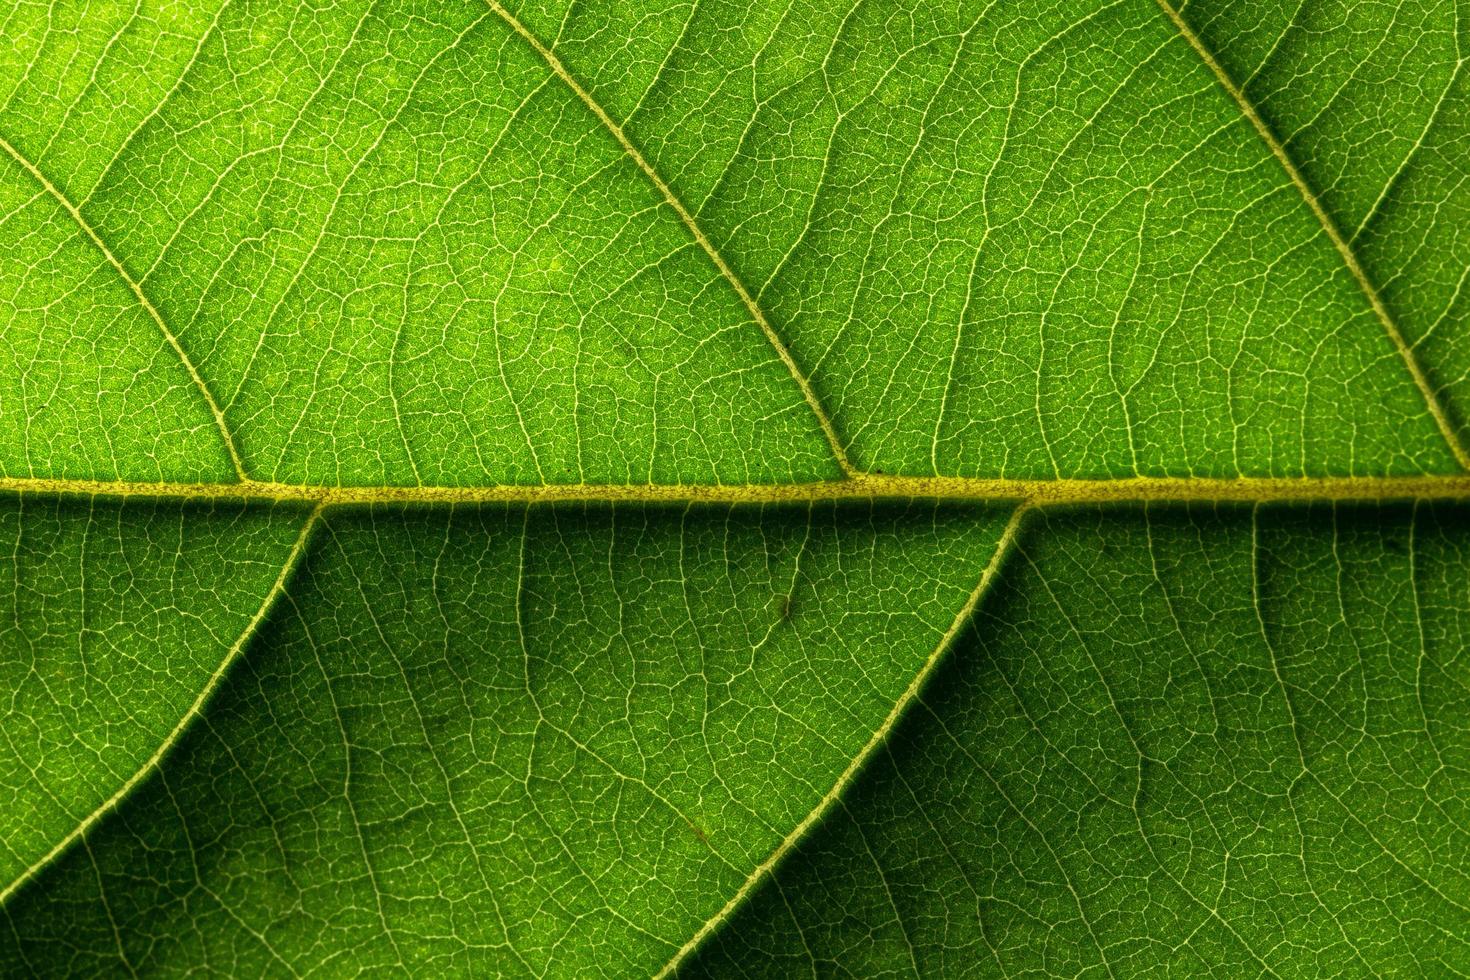 Green leaf background, close-up photo